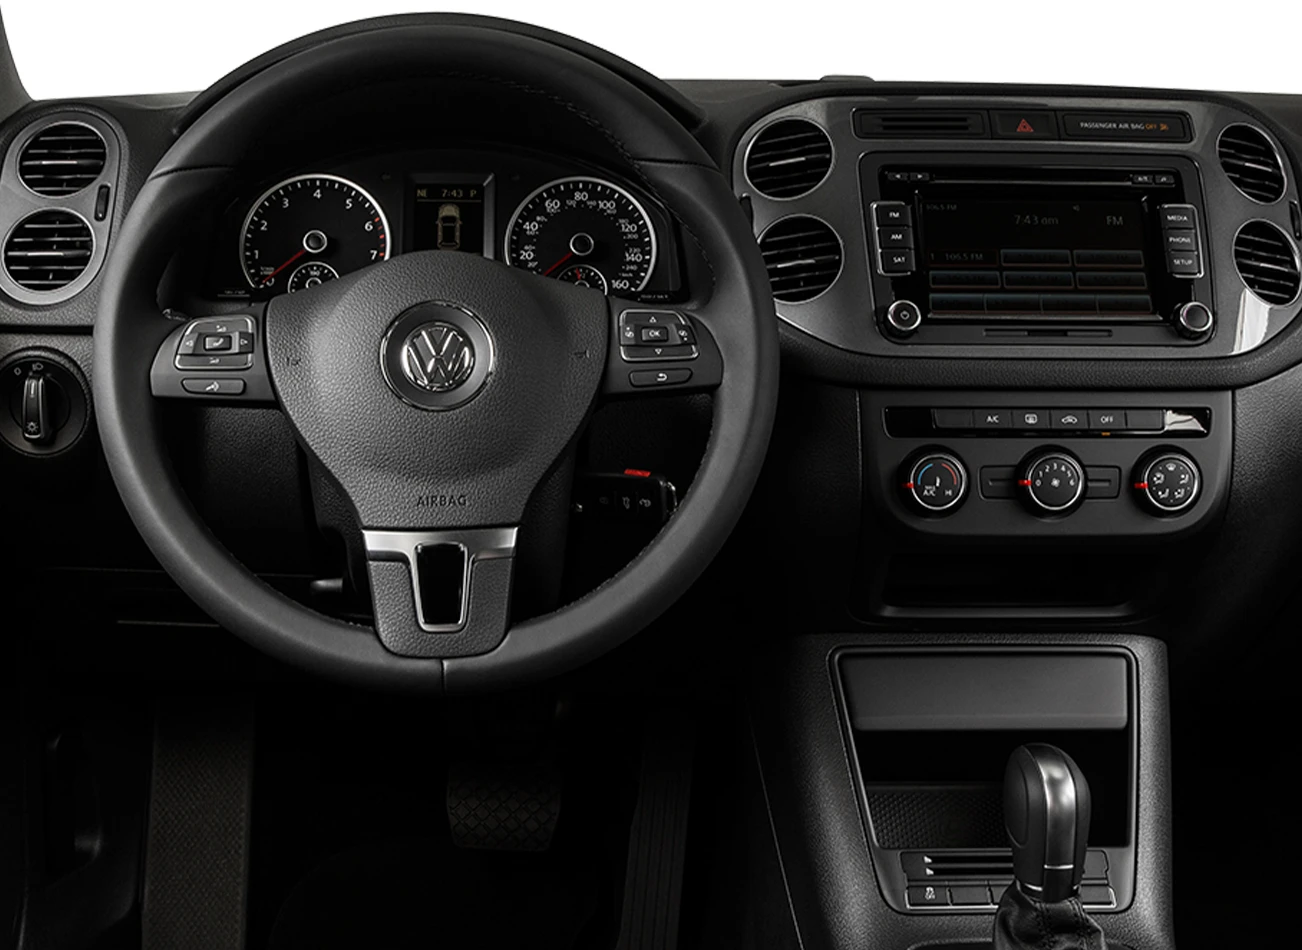 2015 Volkswagen Tiguan: Reviews, Photos, and More: Reasons to Buy #2 | CarMax